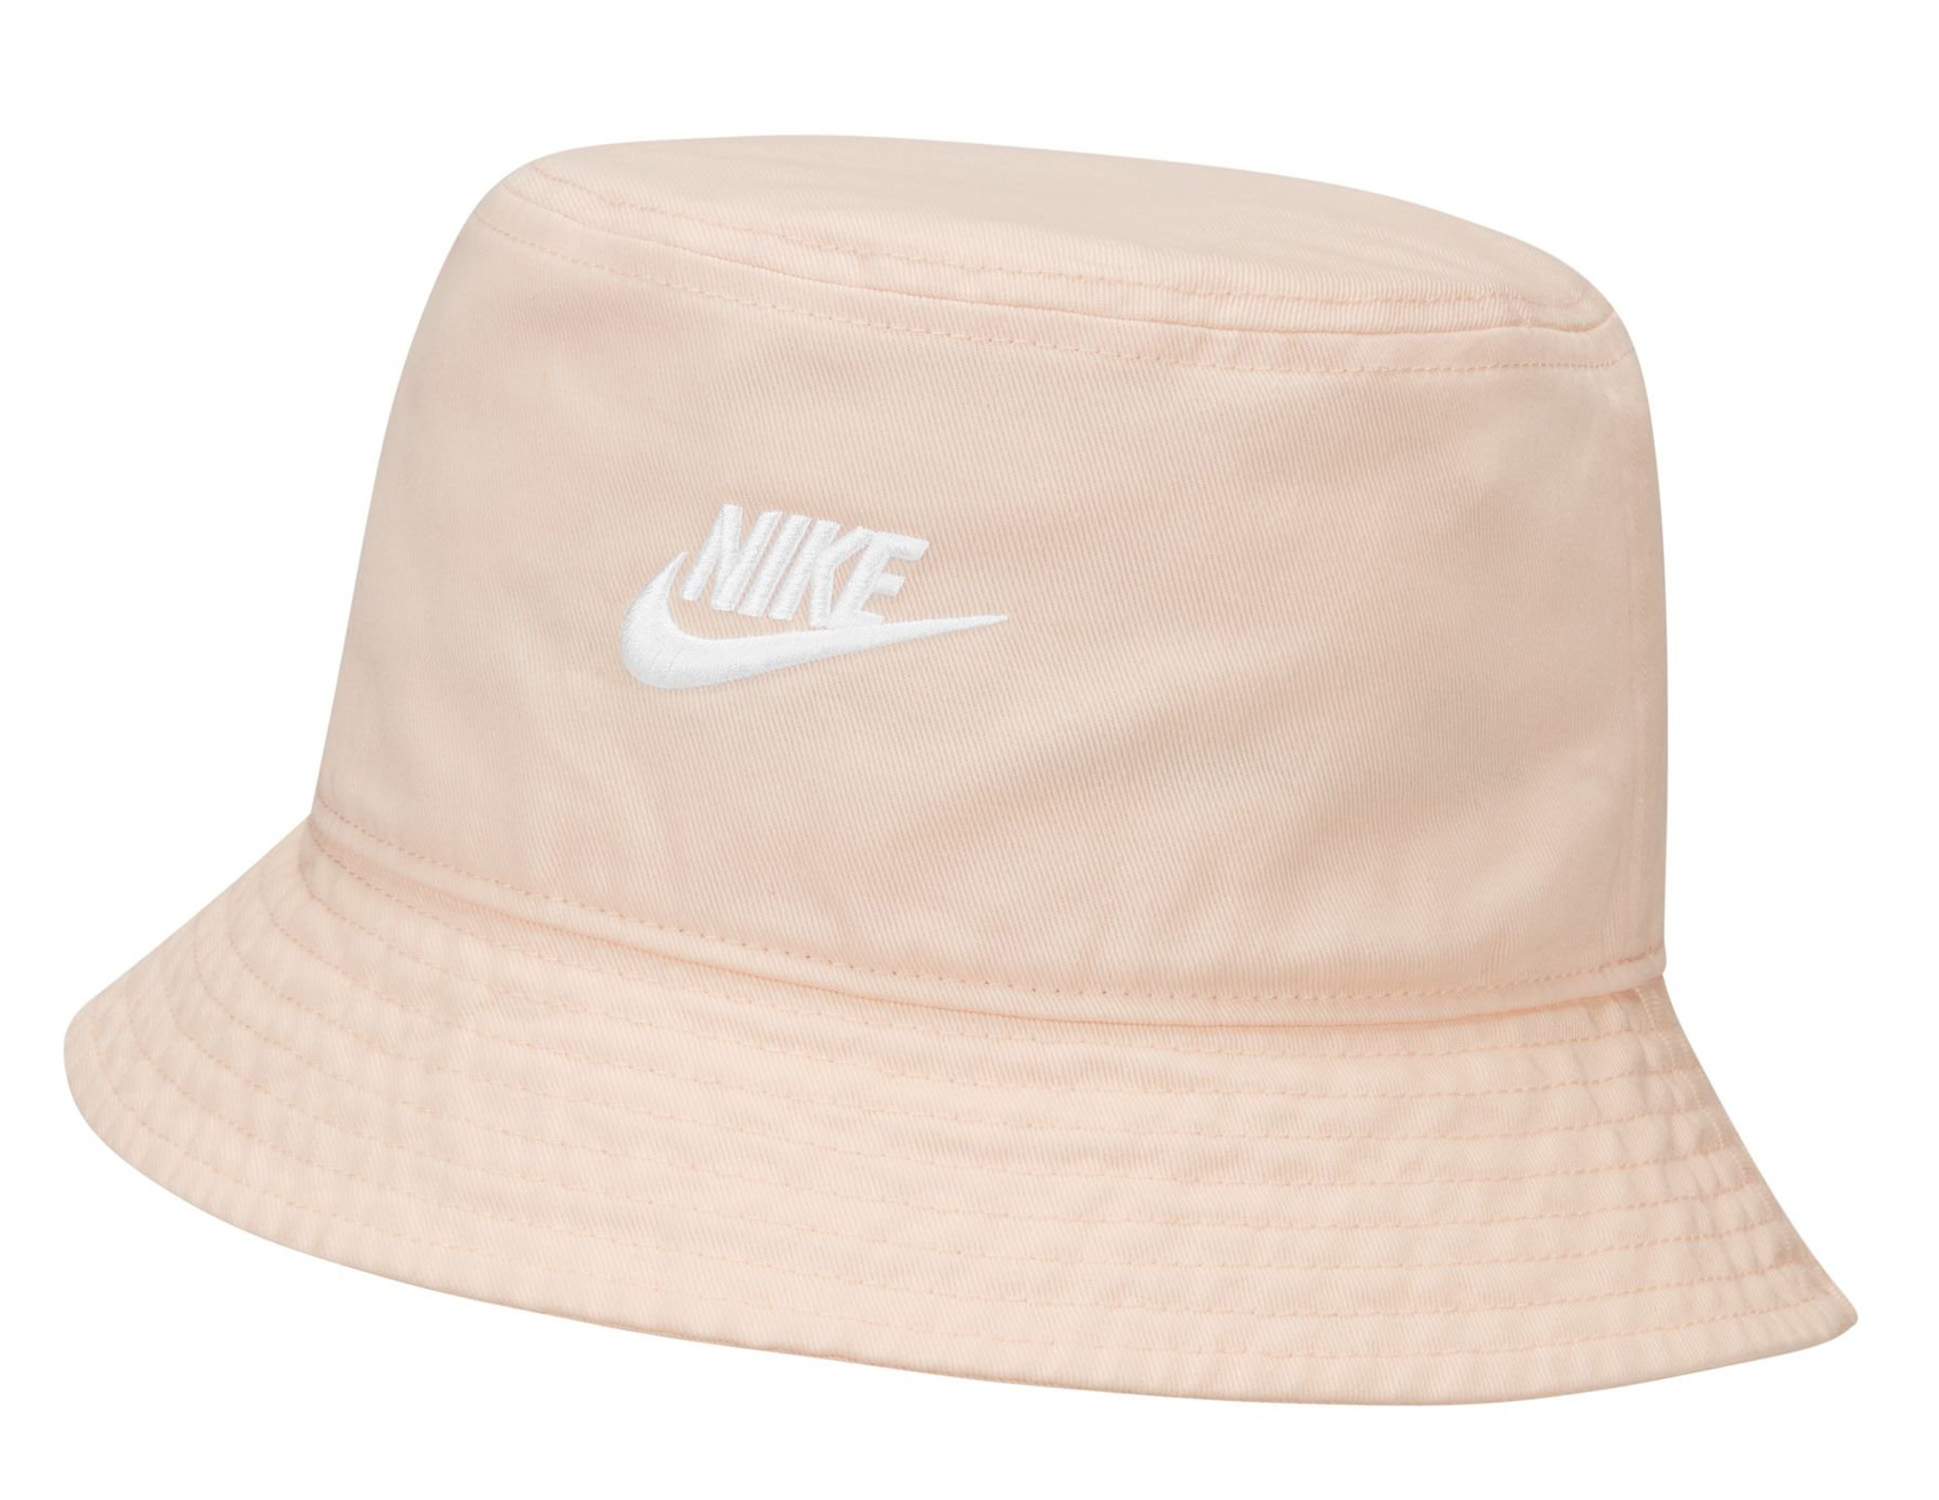 Nike Apex Futura Wash Bucket Hat Guave Ice White 23405